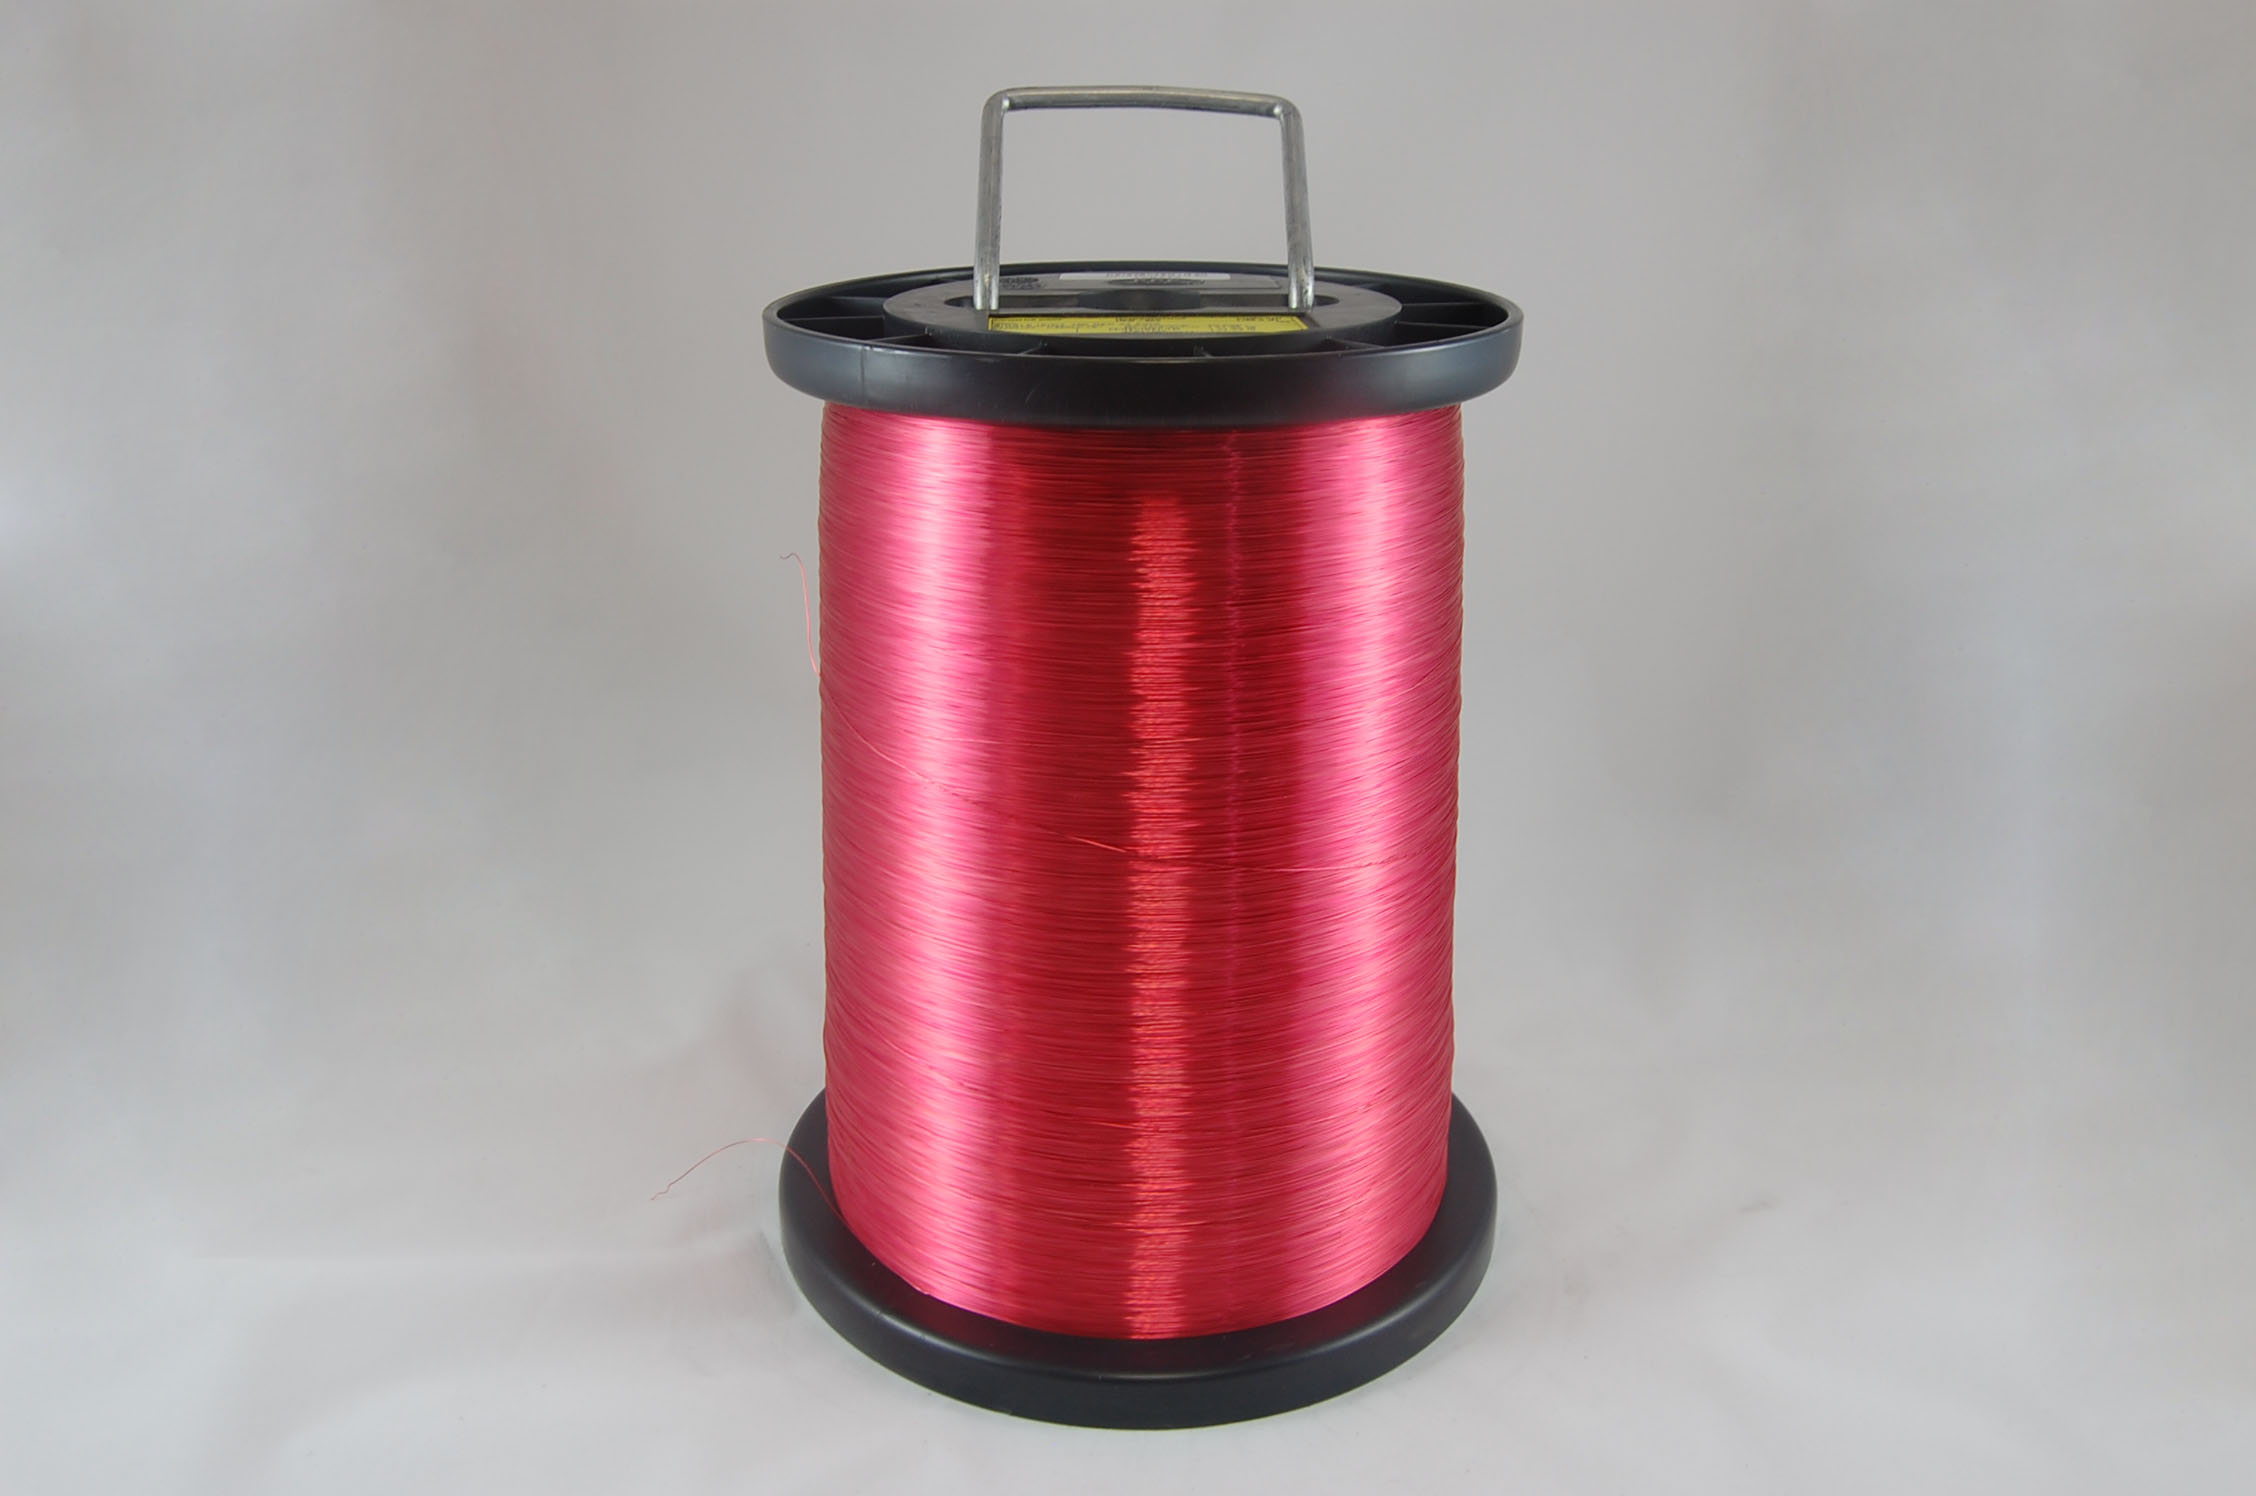 #13 Heavy INVEMID 200 Round MW 35 Copper Magnet Wire 200°C, copper, 45 LB half pack pail (average wght.)